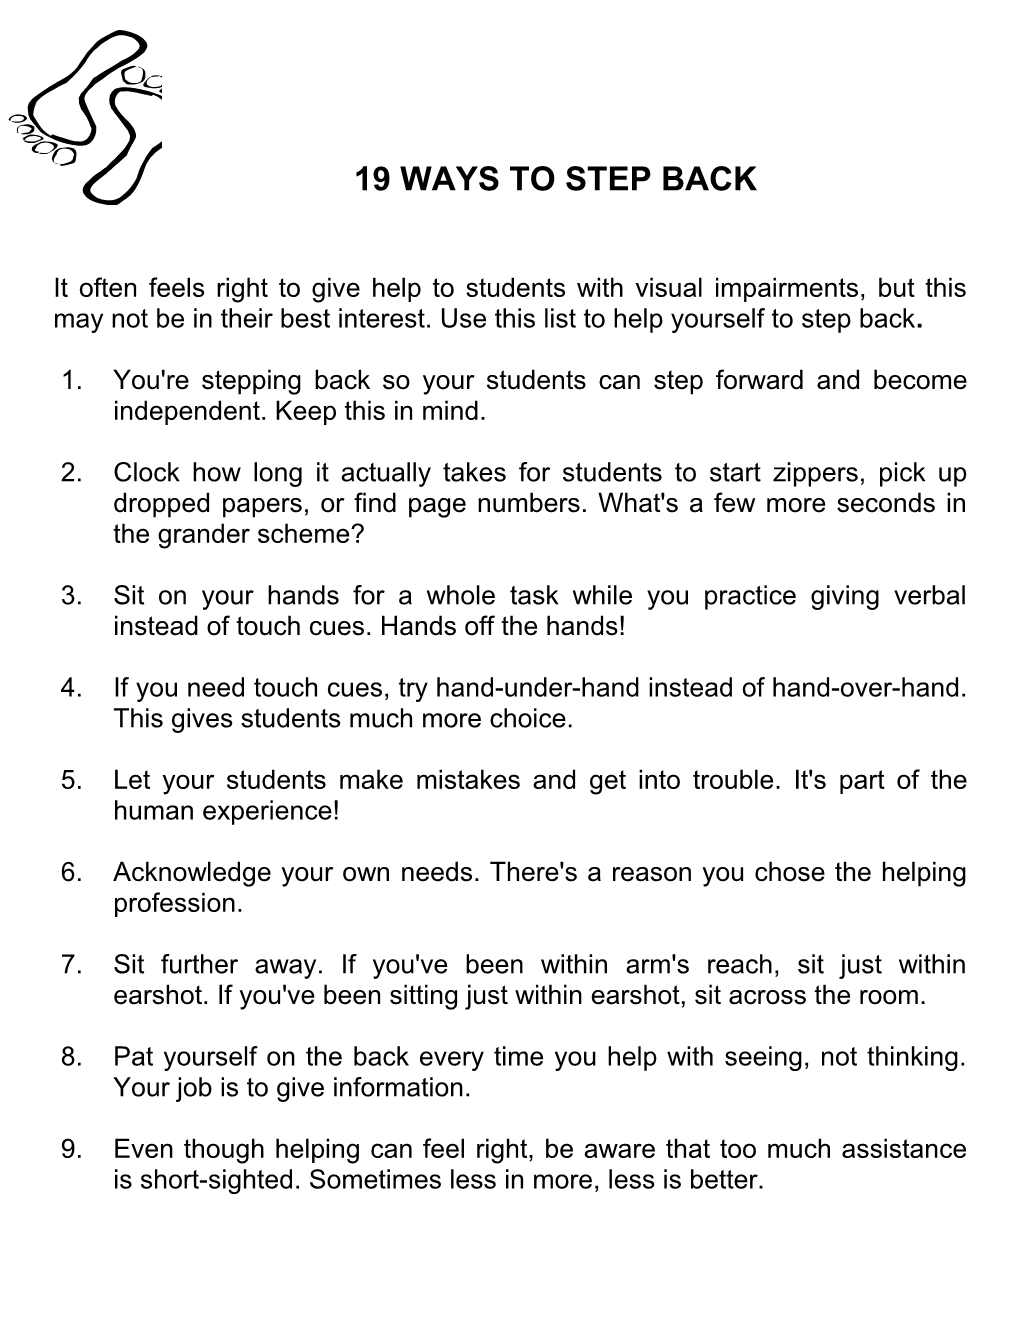 19 Ways to Step Back